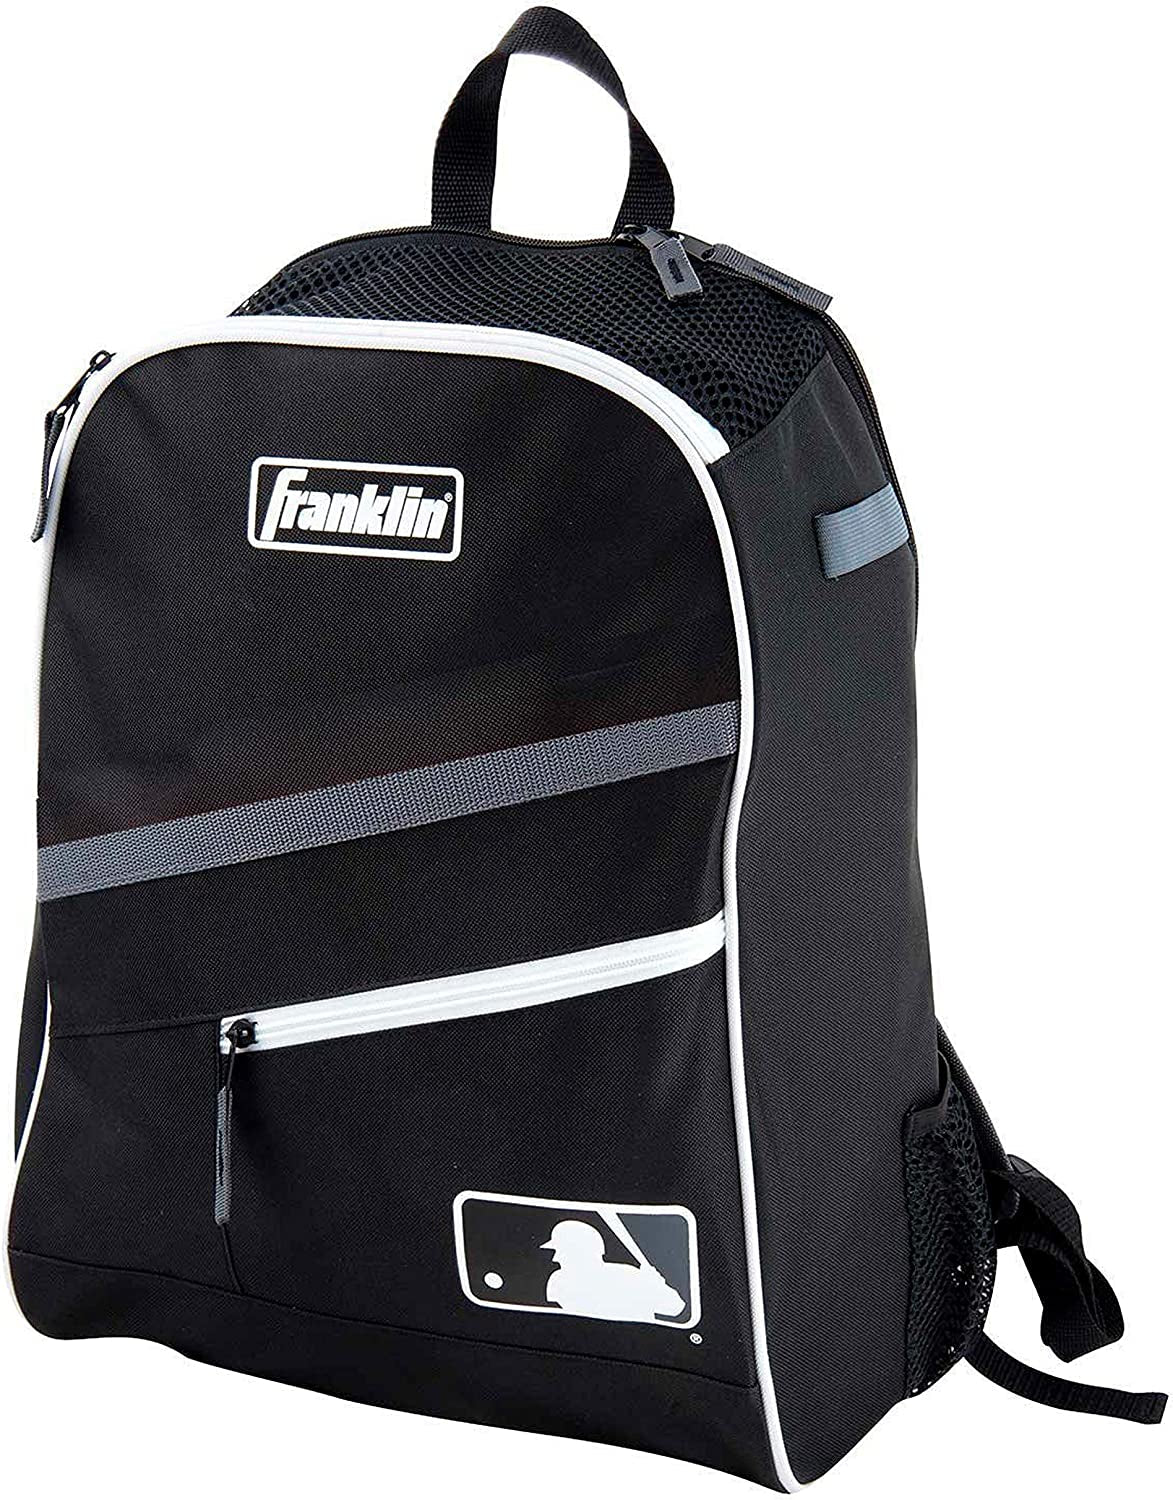 Kids MLB Baseball Batpack Bag - Youth Baseball, Softball + Teeball Backpack - Sports Equipment Bag for Kids + Toddlers - Holds (2) Teeball + Baseball Bats + Includes Fence Hook